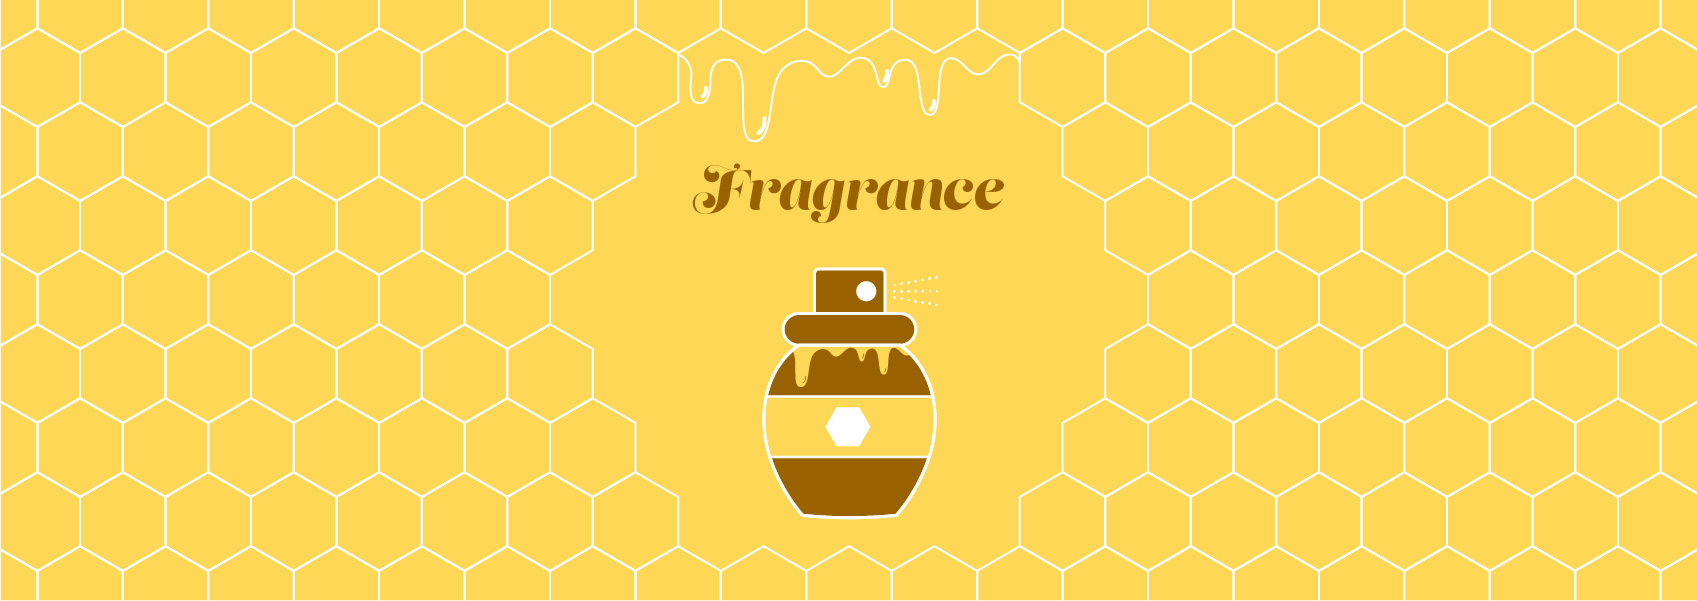 illustration of honeycomb, bottle of perfume in the shape of a bottle of honey,